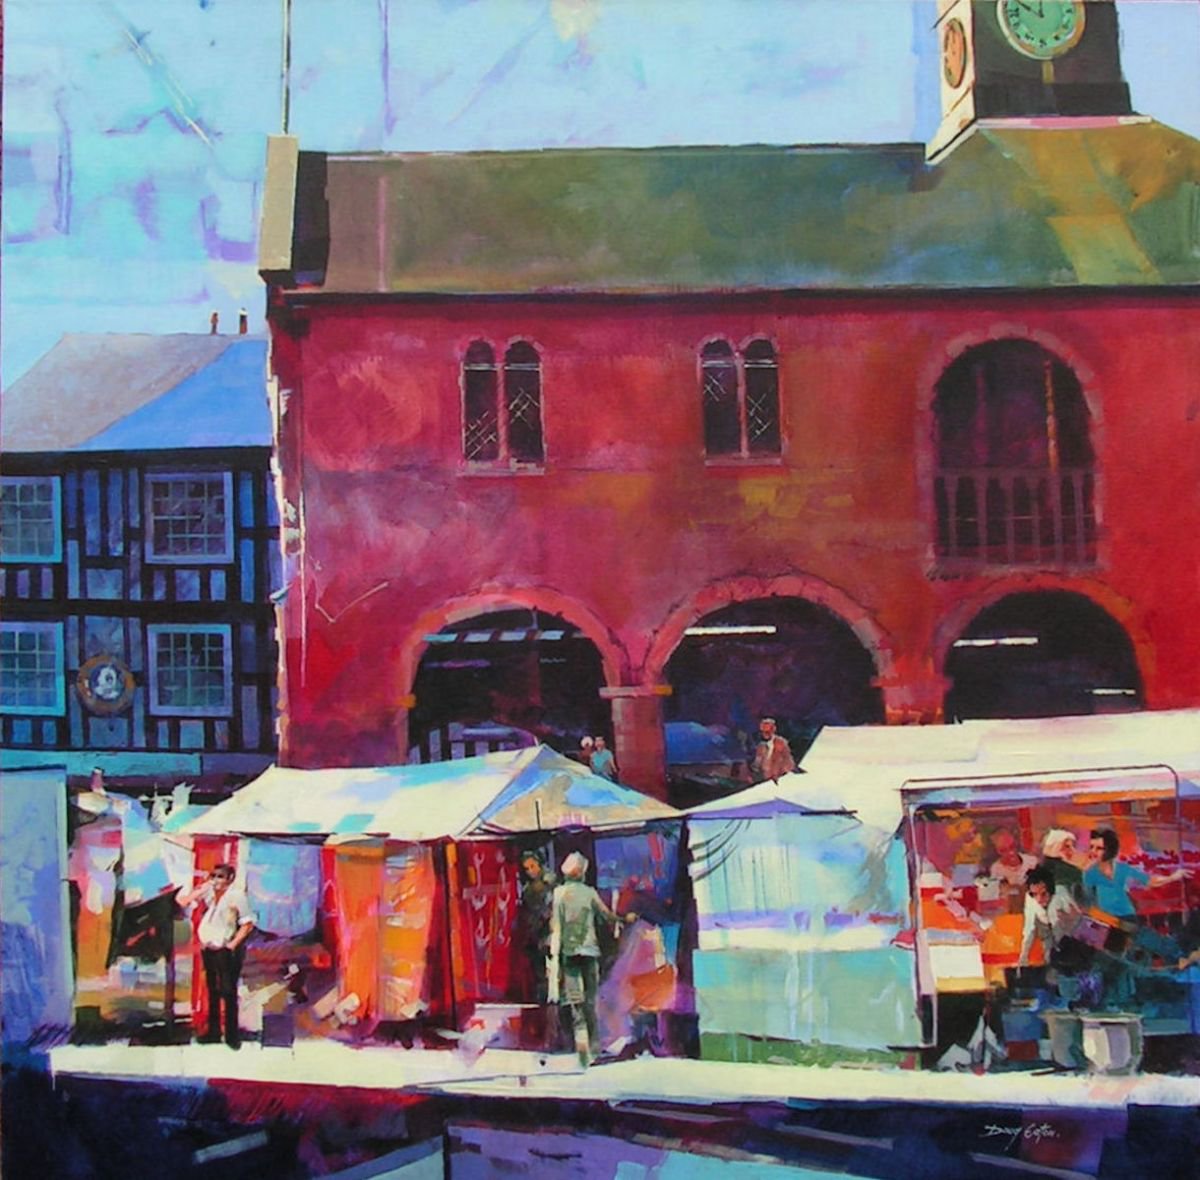 Market Day, Ross-On-Wye by Doug Eaton